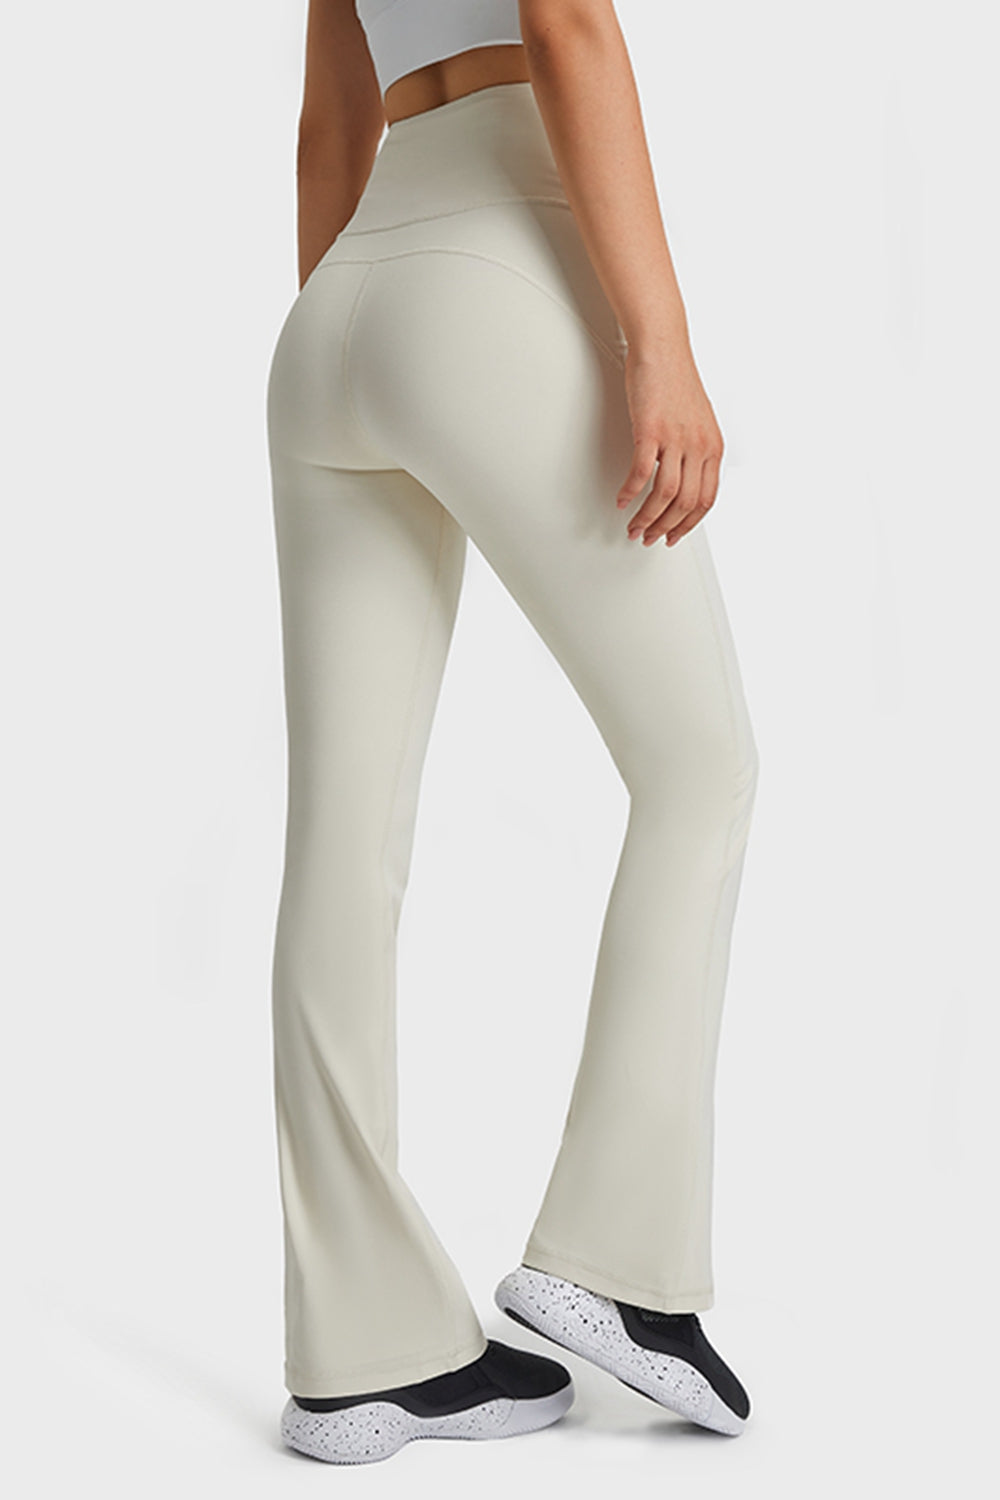 Elastic Waist Flare Yoga Pants - DromedarShop.com Online Boutique